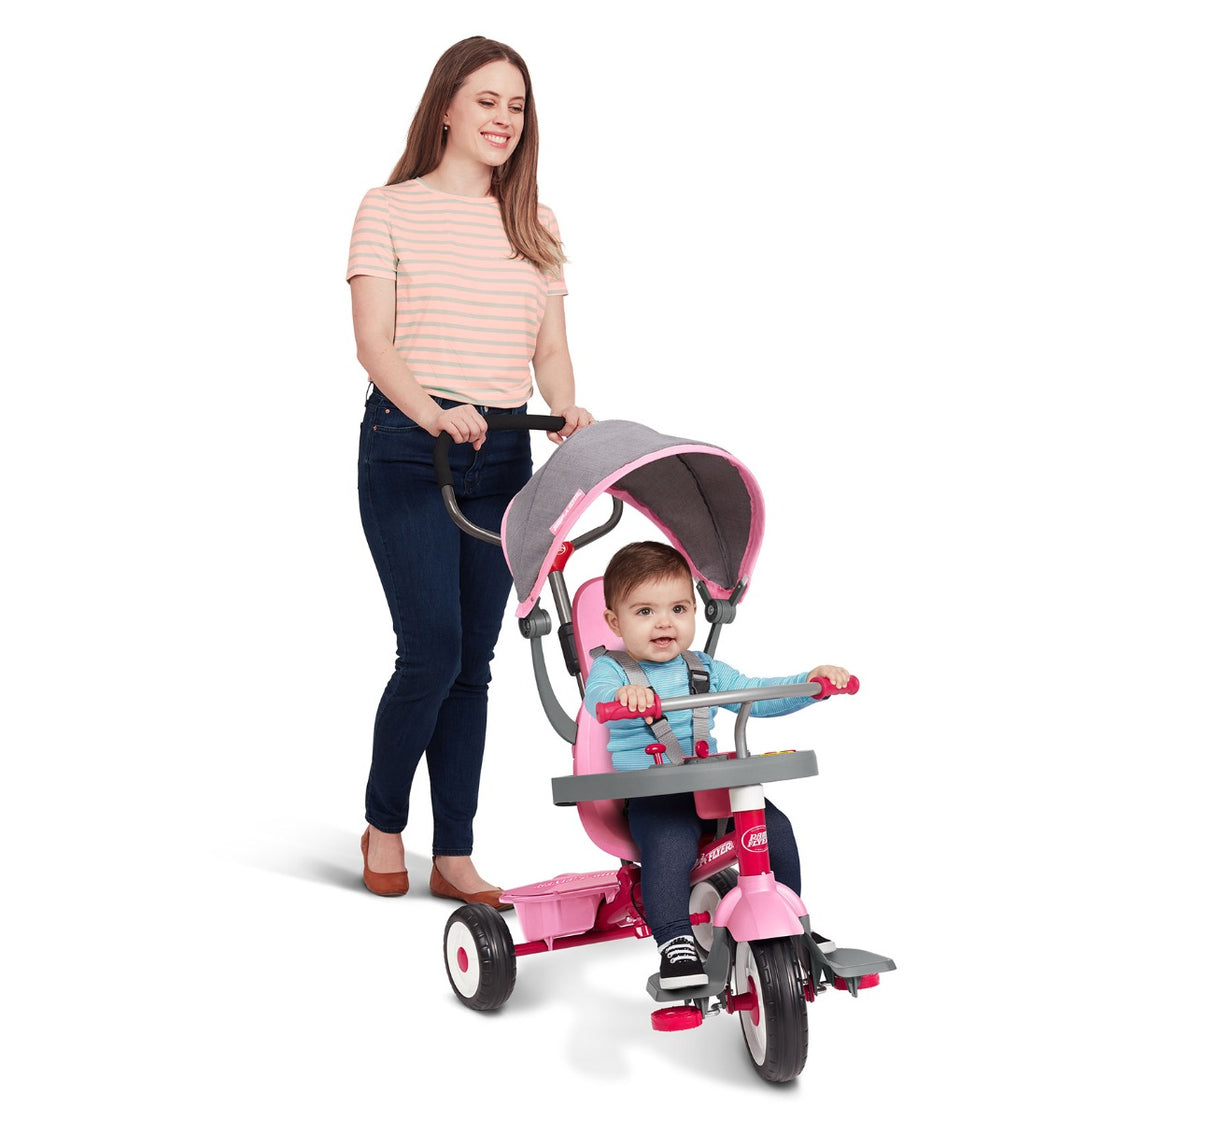 Woman pushing girl riding Pink 5-In-1 Stroll â€˜N TrikeÂ®  in Infant Trike Mode